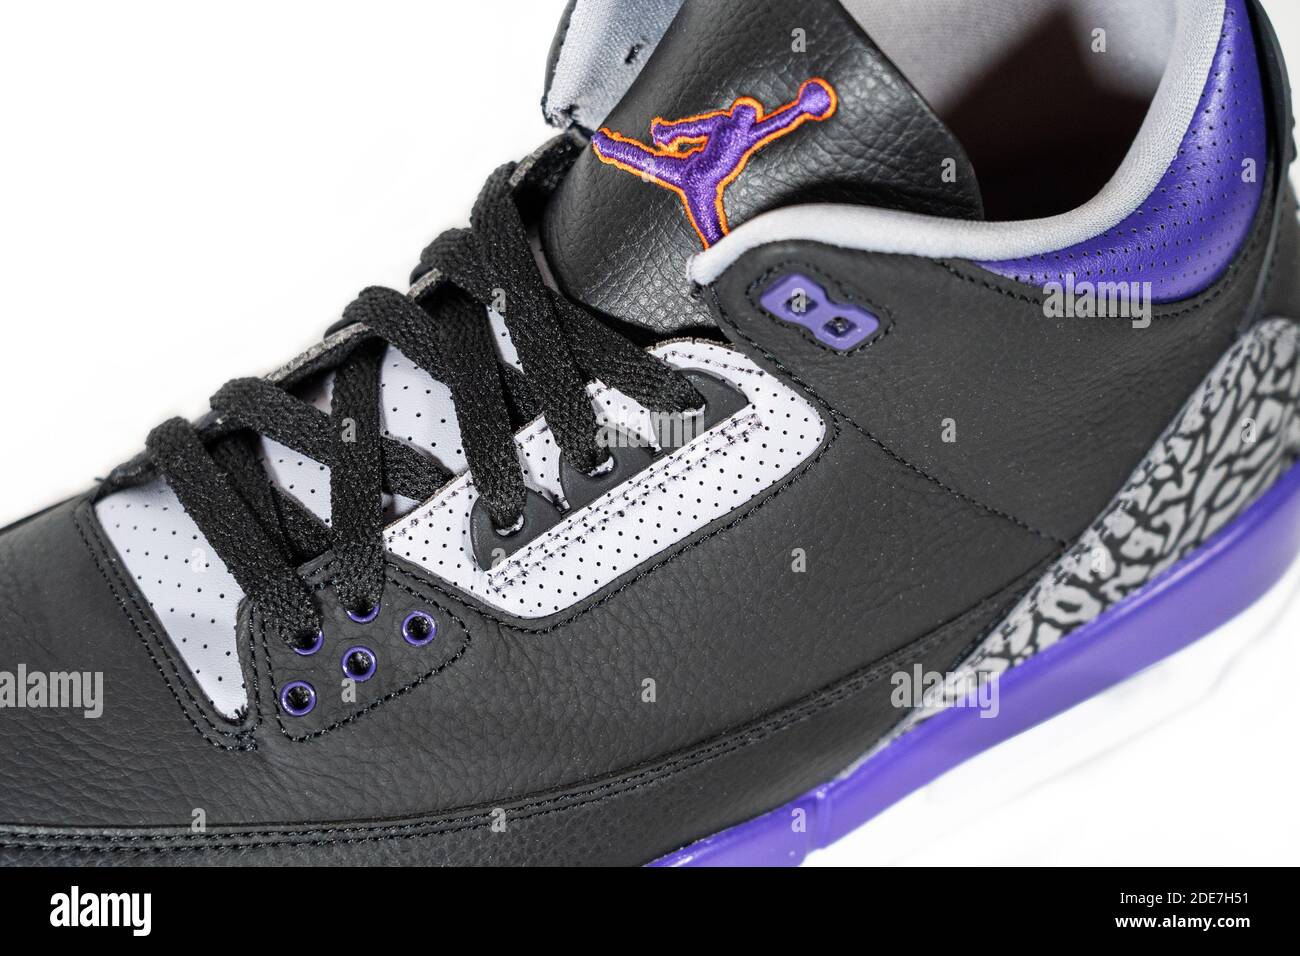 Air Jordan 3 Retro Court Purple - legendario y famoso Nike and Jordan  Zapatillas de baloncesto retro